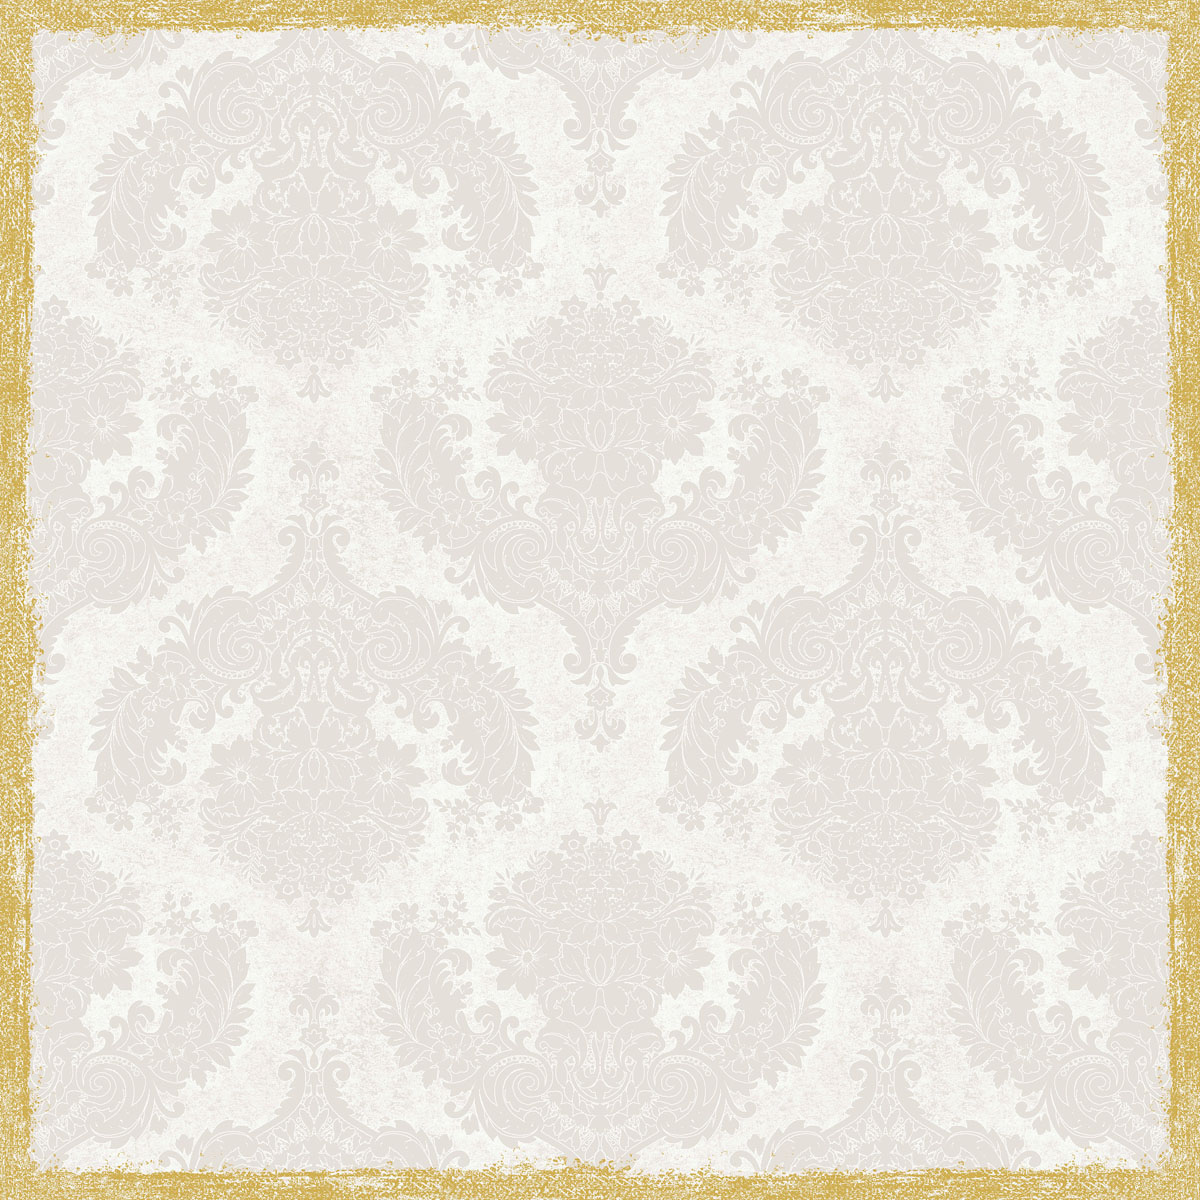 Duni Dunicel-Mitteldecken 84 x 84 cm Royal white